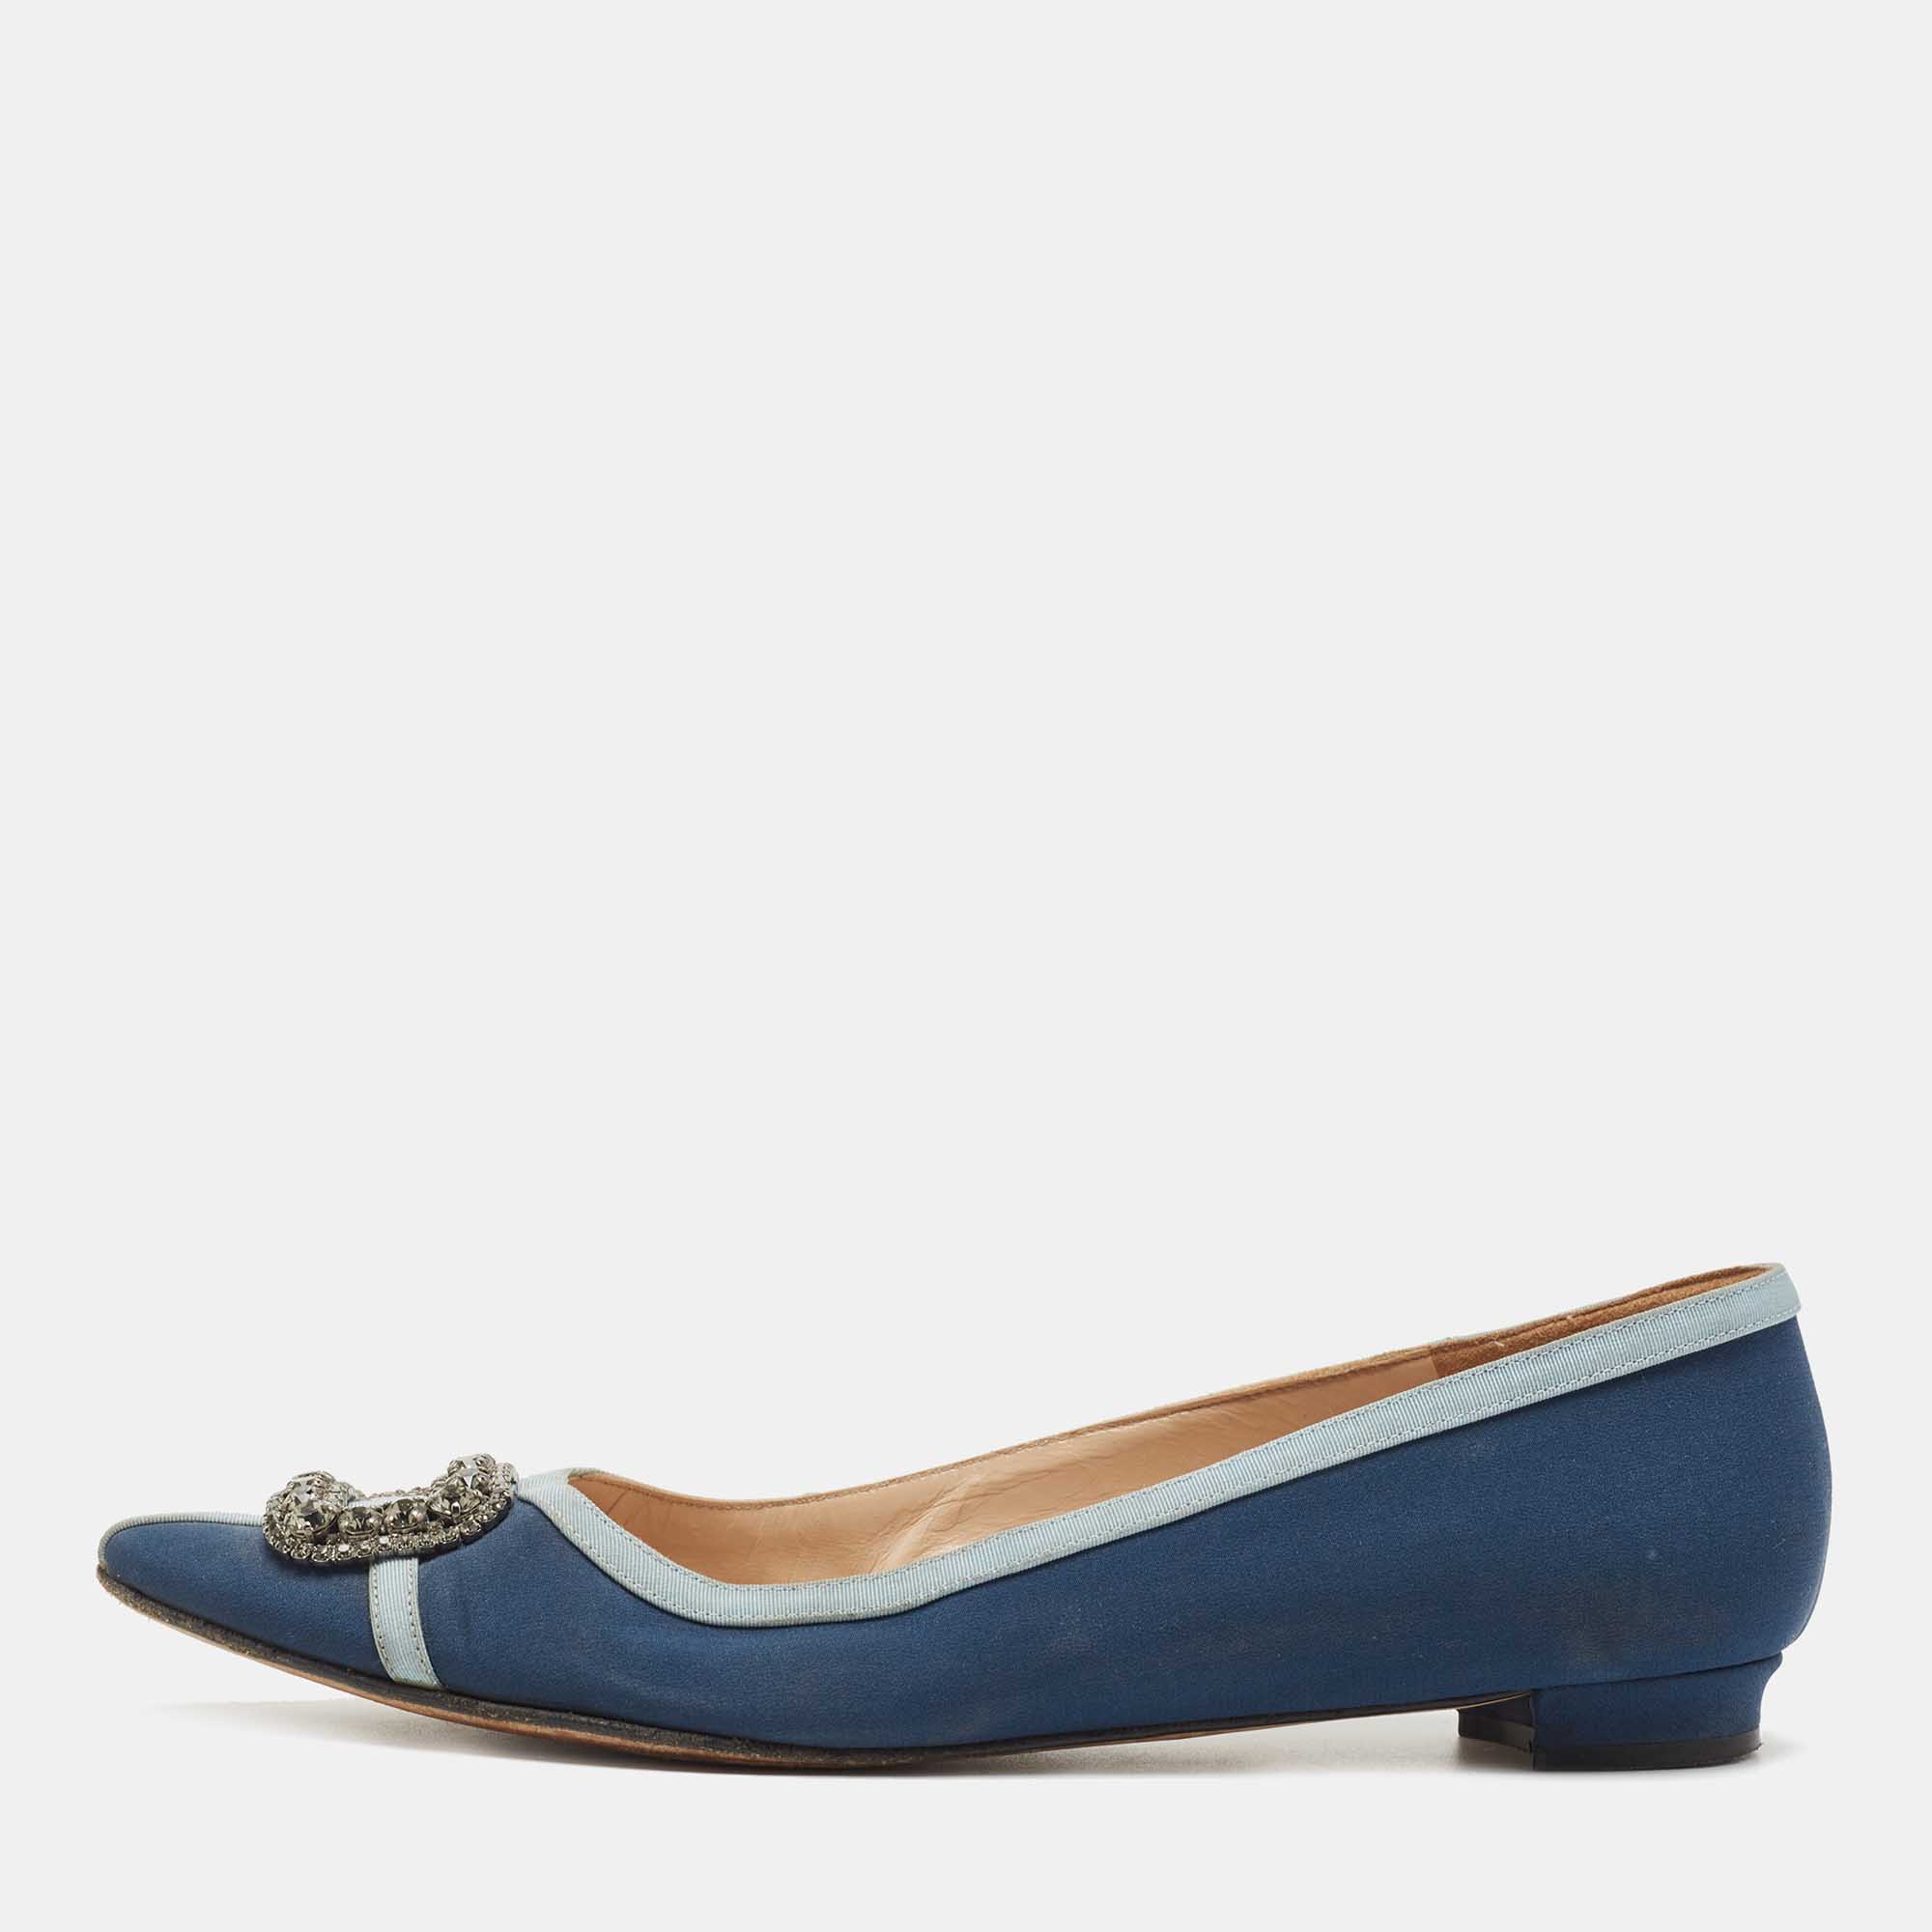 Manolo Blahnik Blue Satin Gotrian Crystal Embellished Pointed Toe Ballet Flats Size 40.5